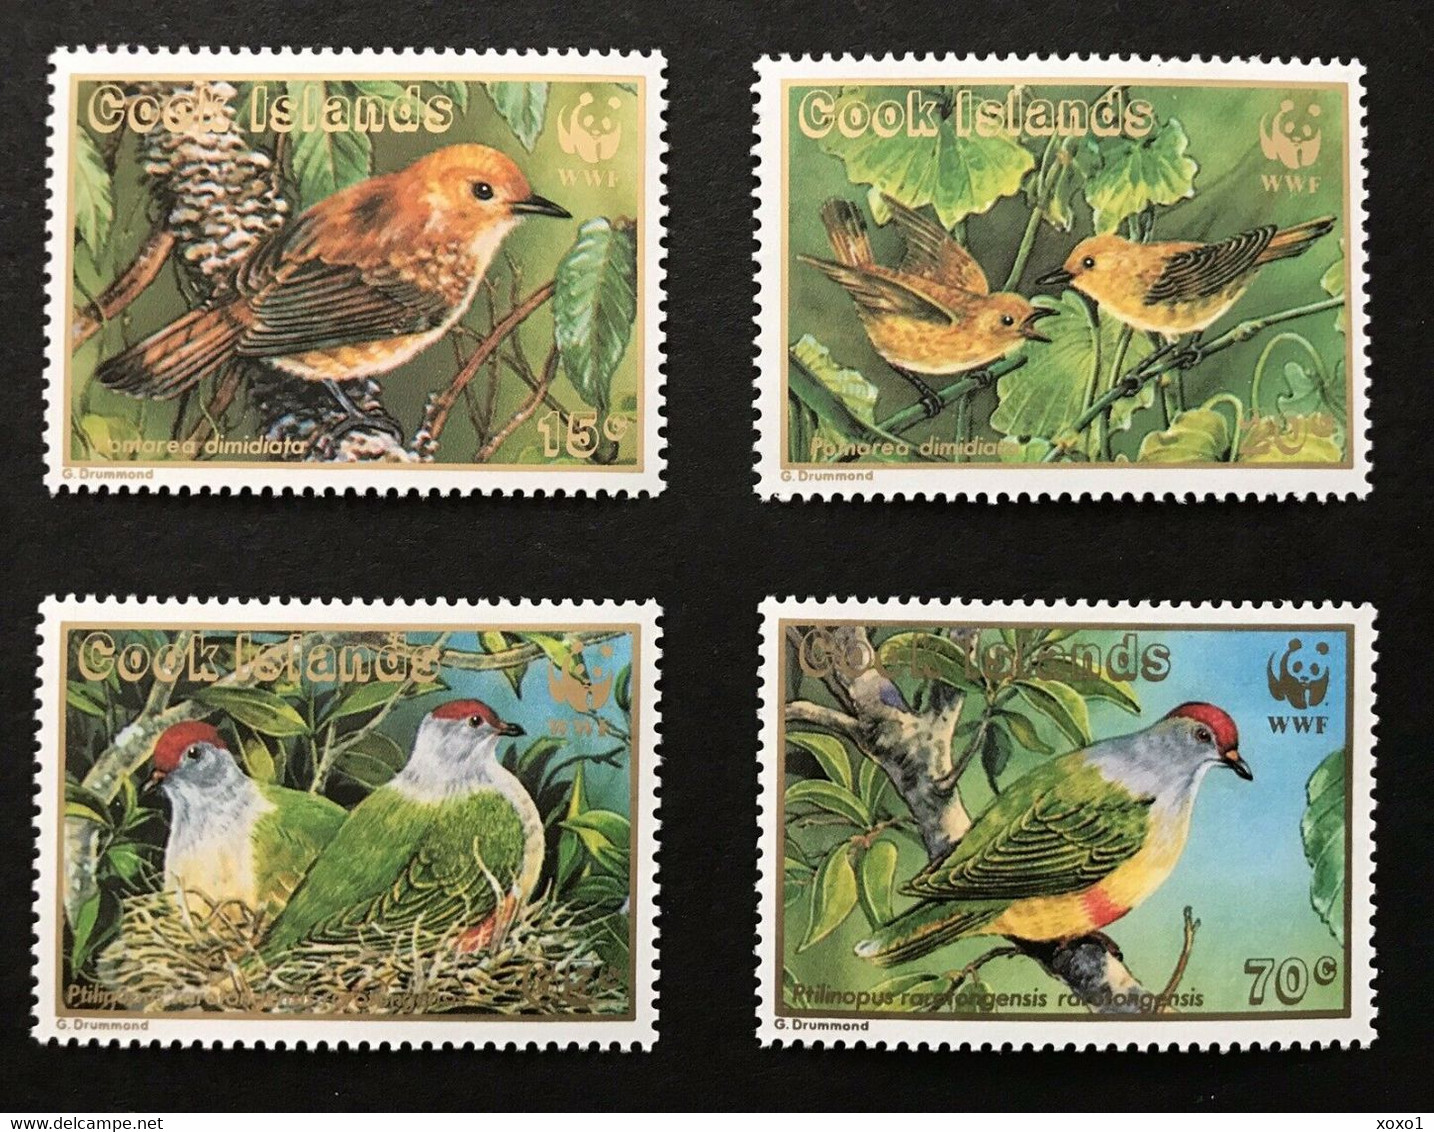 Cook Islands 1989 MiNr. 1278 - 1285 Birds  Rarotonga Monarch , Lilac-crowned Fruit Dove WWF  4v MNH** 15,00 € - Tauben & Flughühner